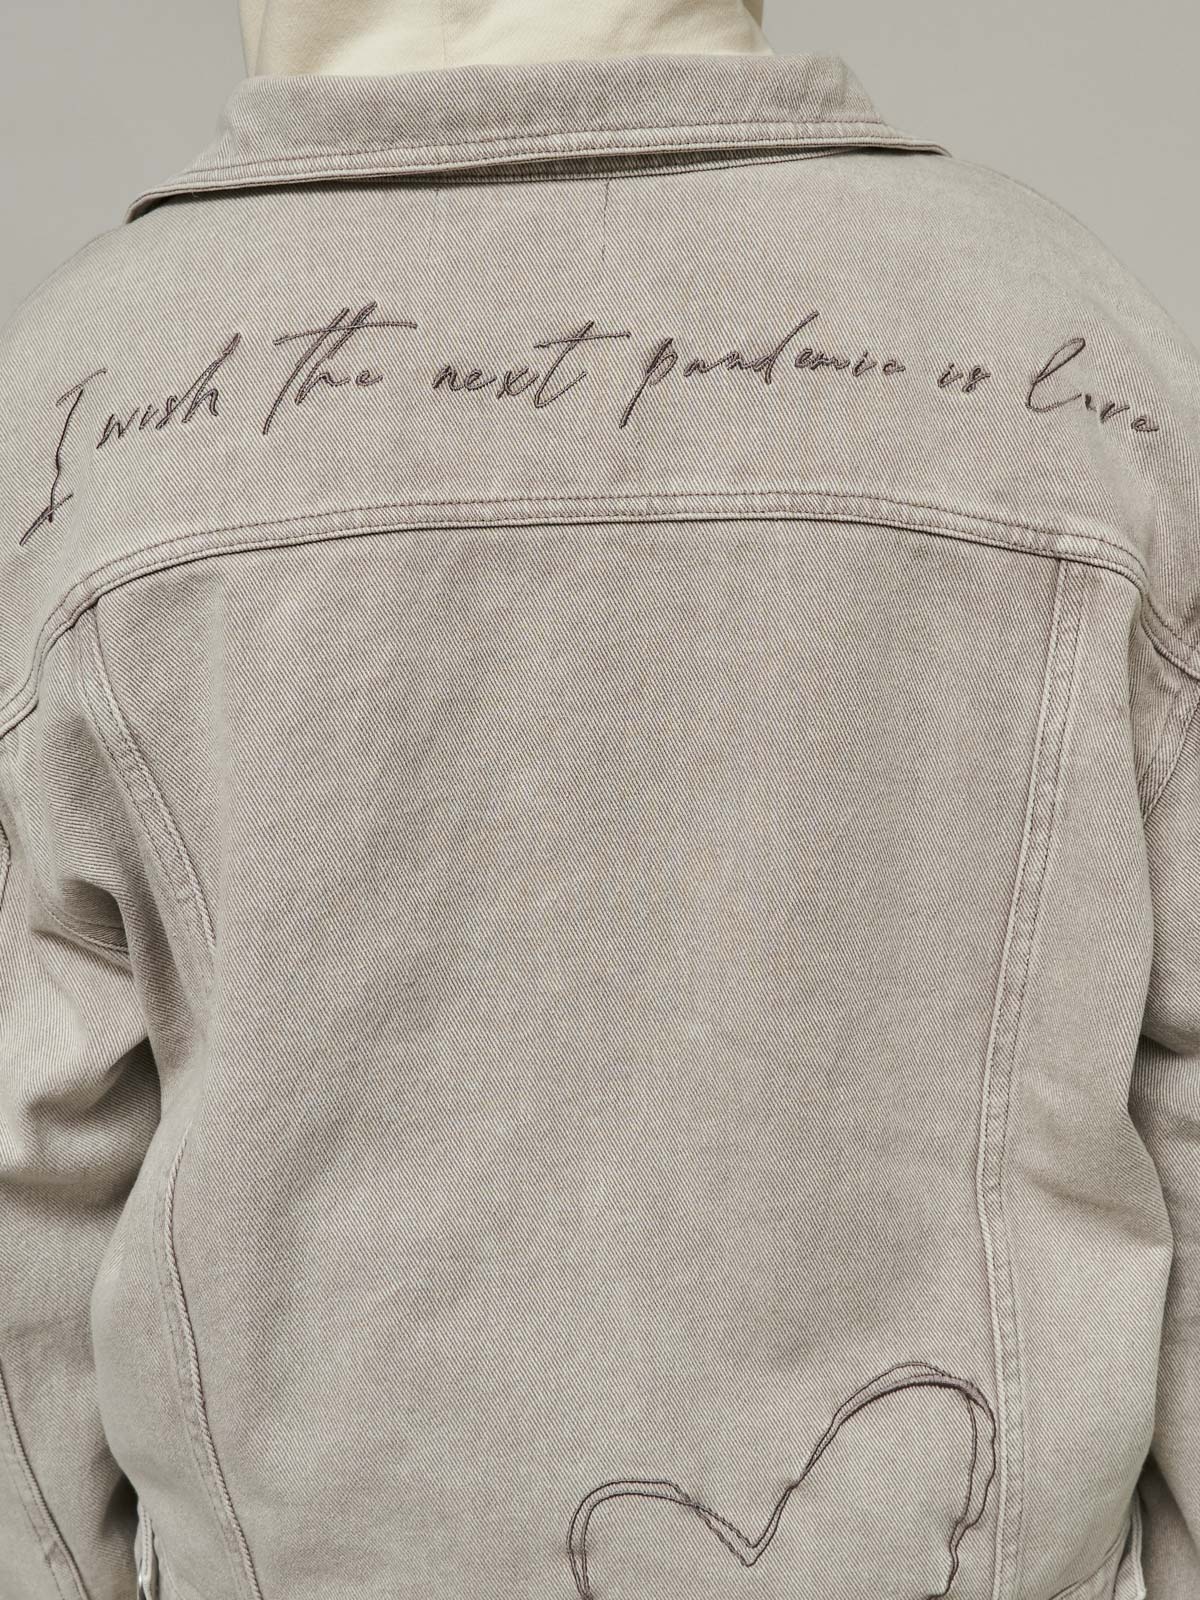 Dune Beige Jeans jacket/ LMTD edition